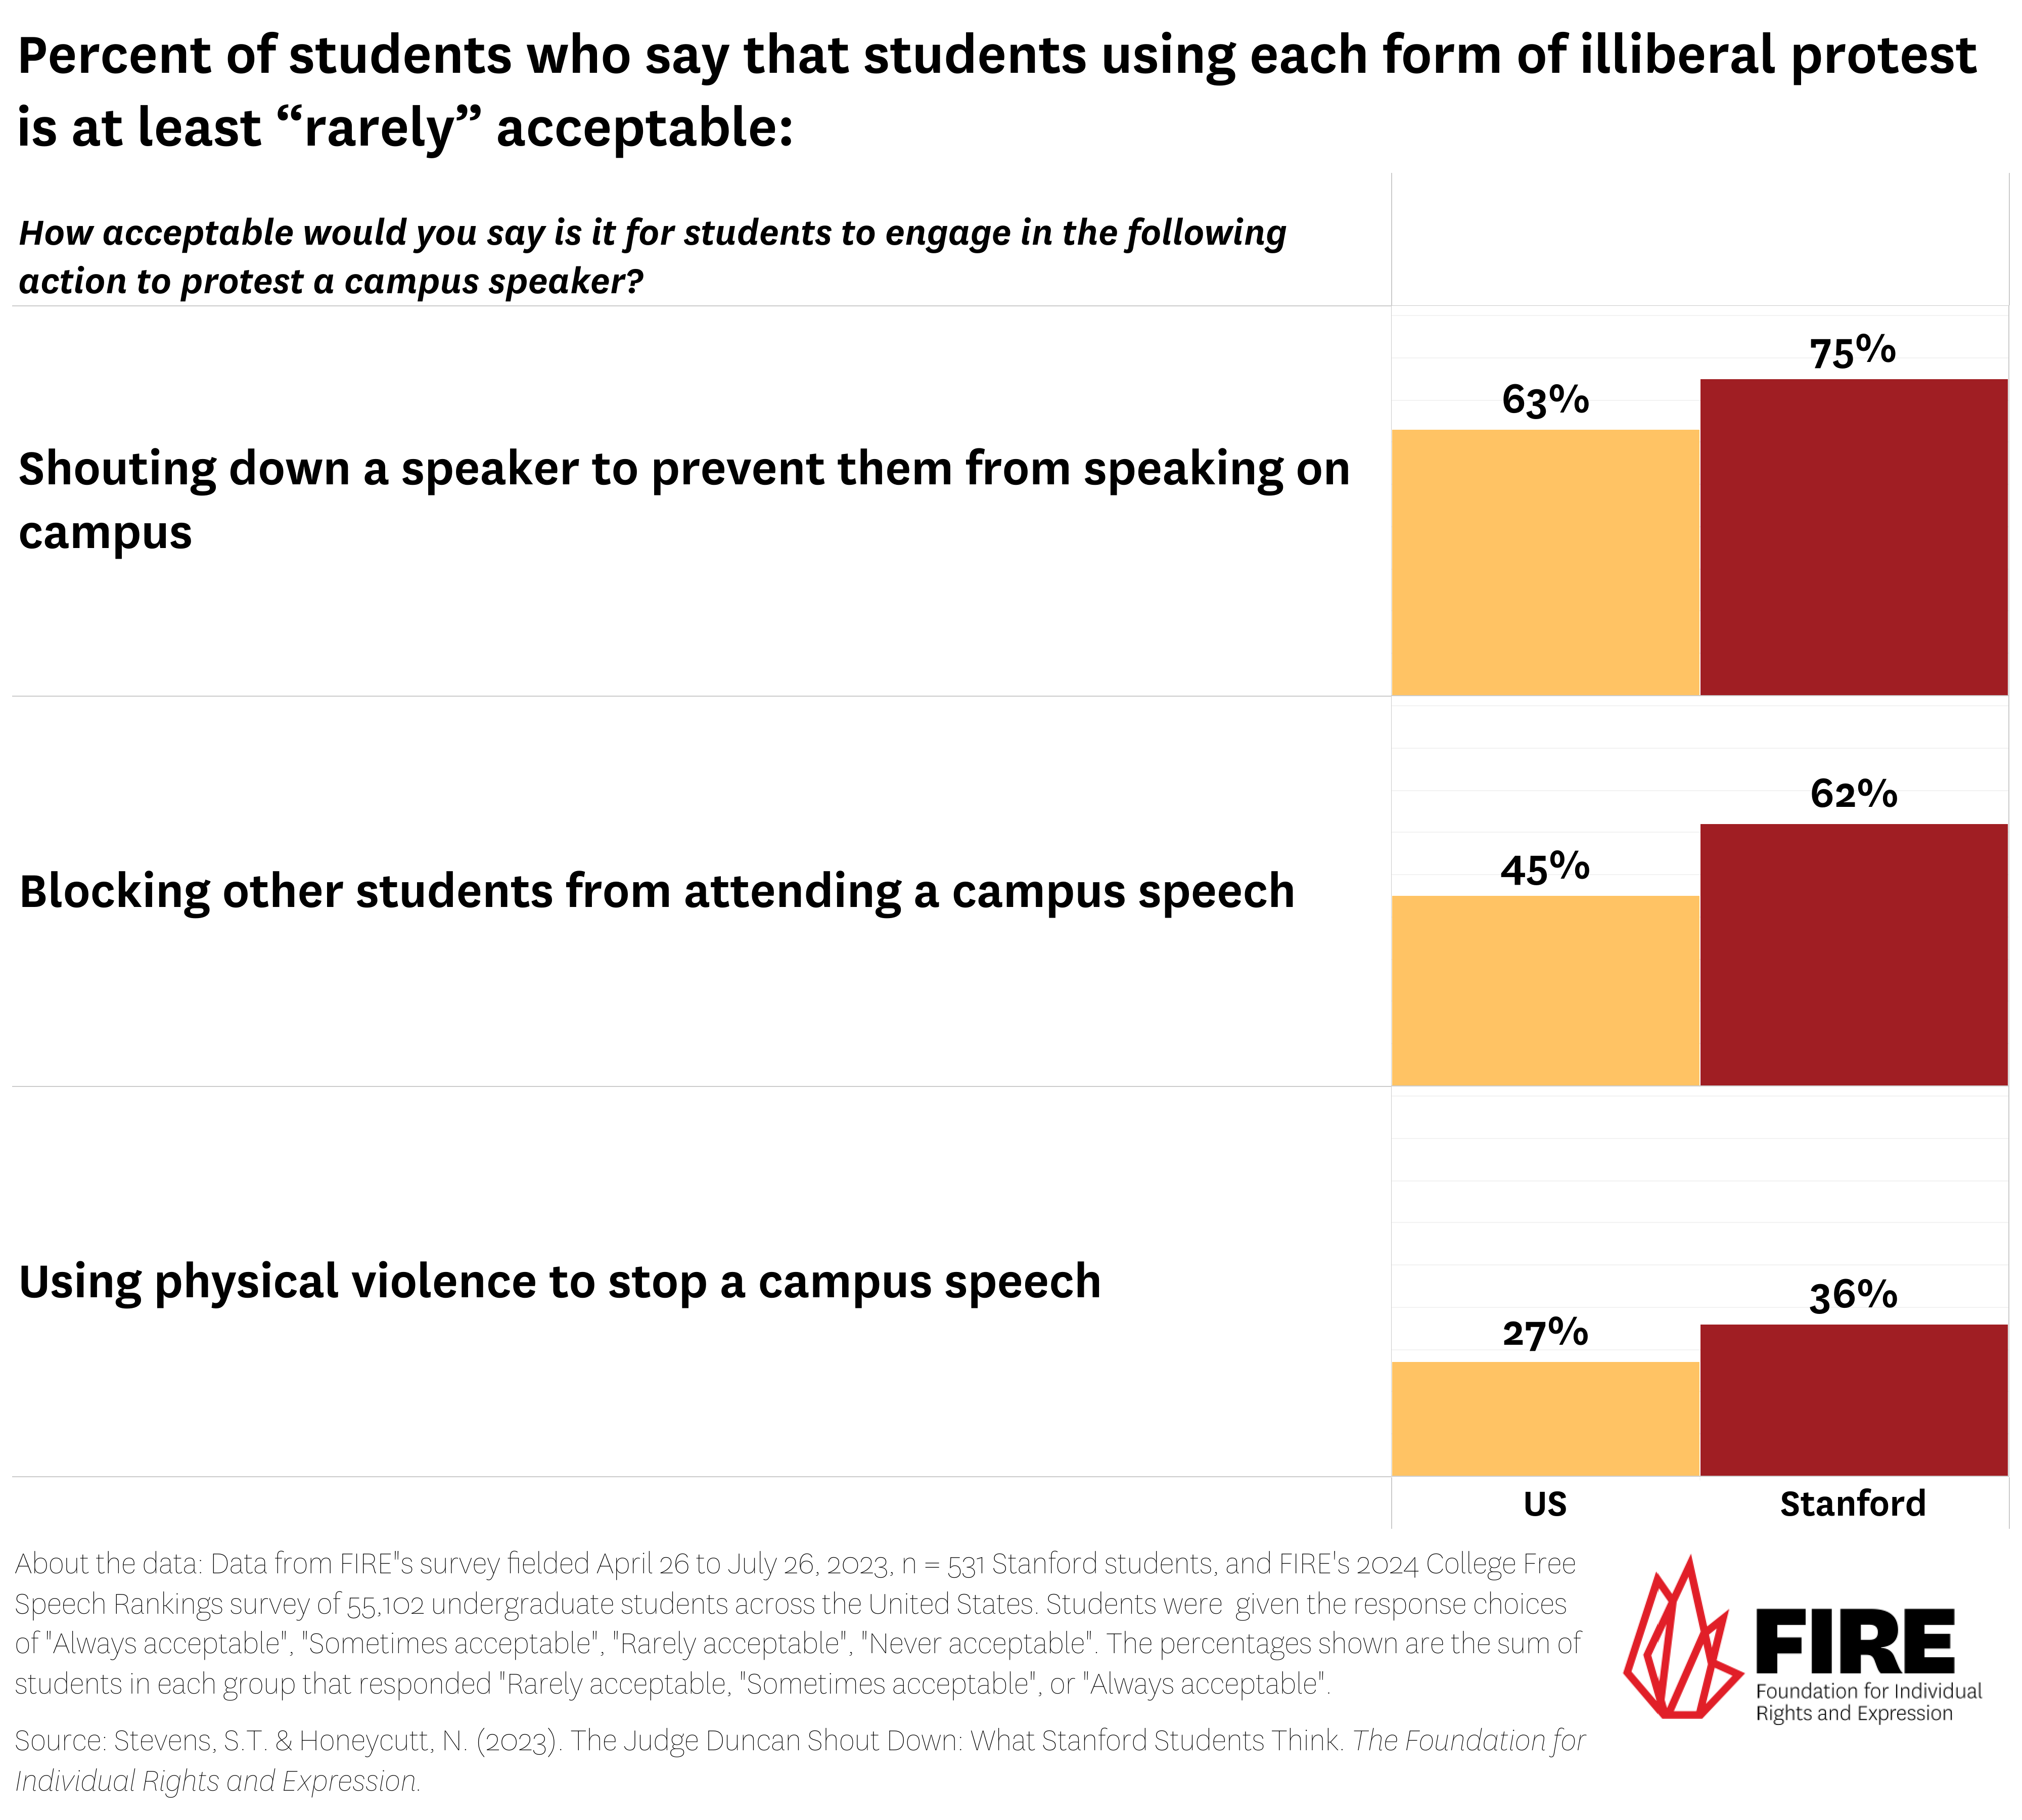 Stanford Duncan Survey - Figure 3 - stanford vs US illiberal protest.png